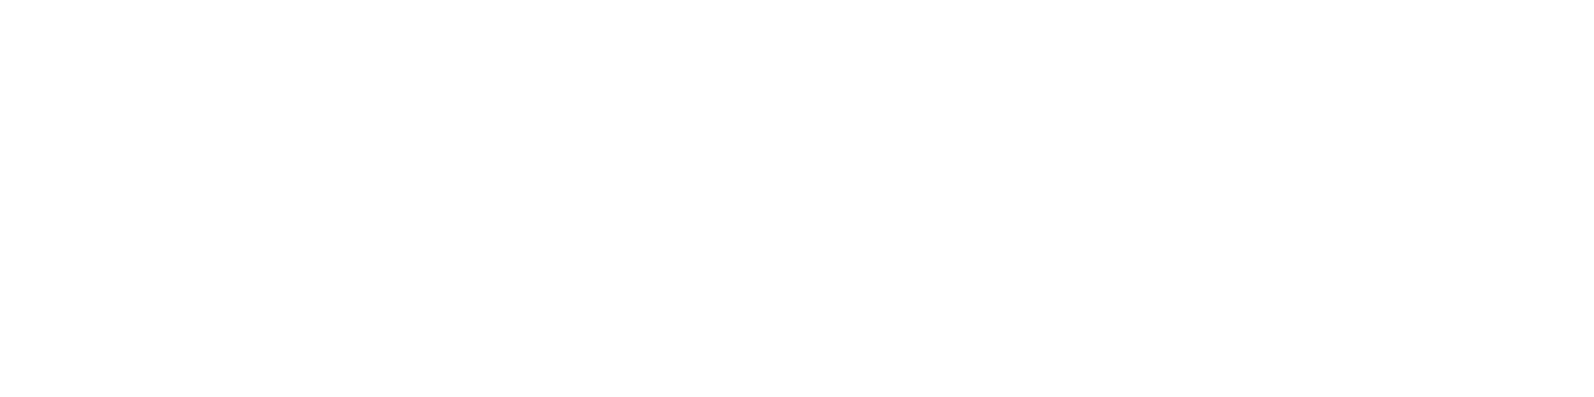 Plus500 logo for dark backgrounds (transparent PNG)